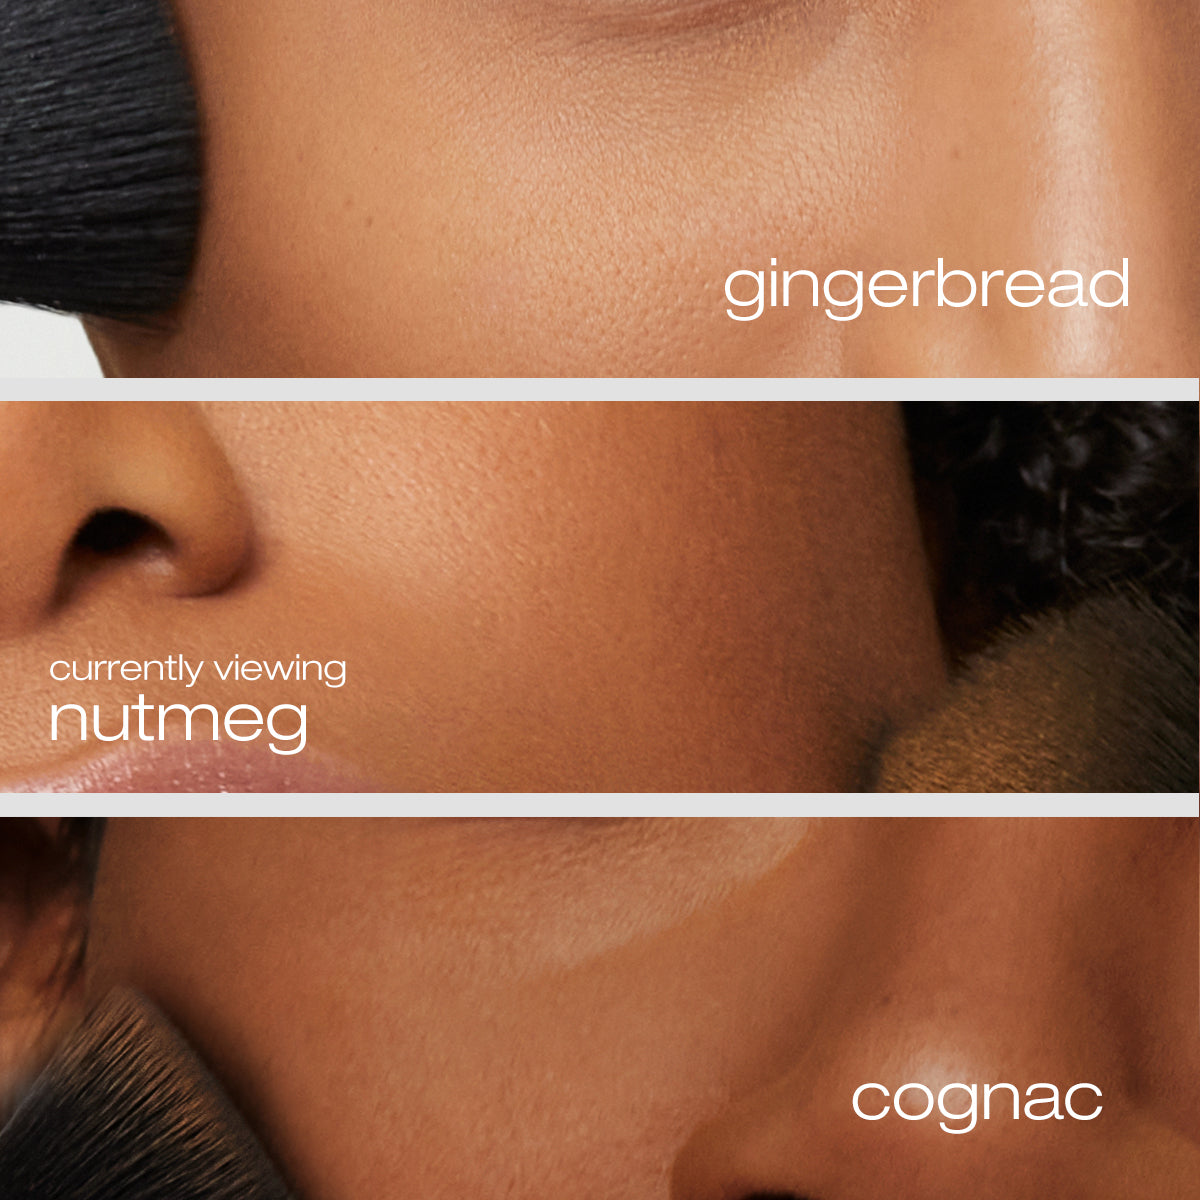 Model applying gingerbread, nutmeg, and cognac foundation on cheeks